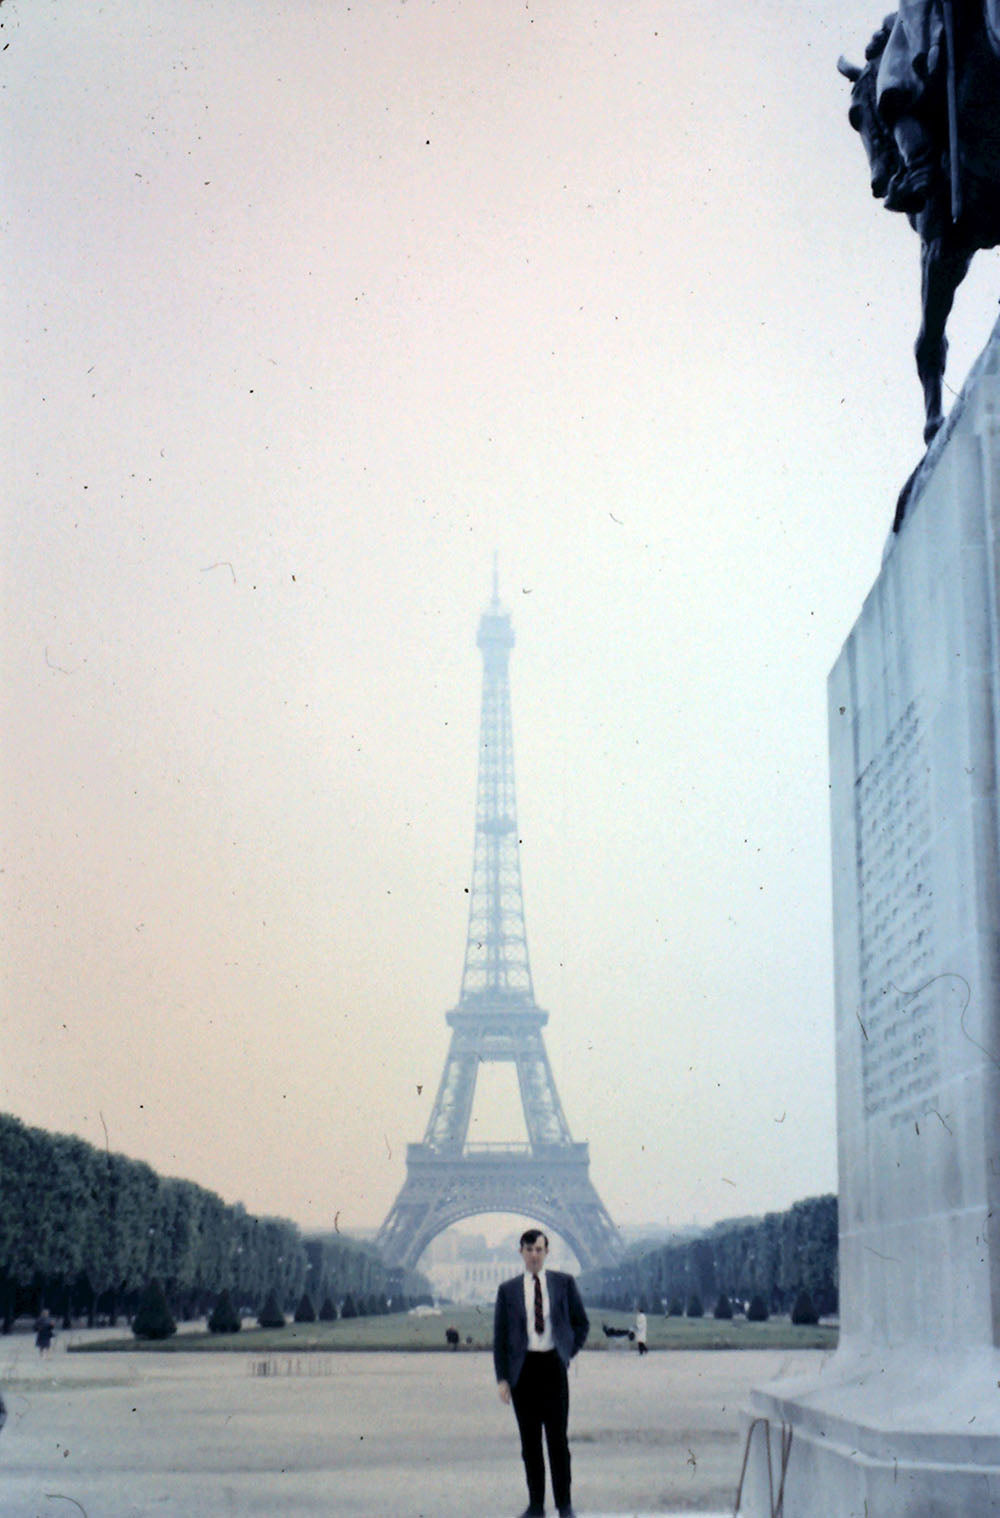 Europe 1968 No 56 Digital Image Download